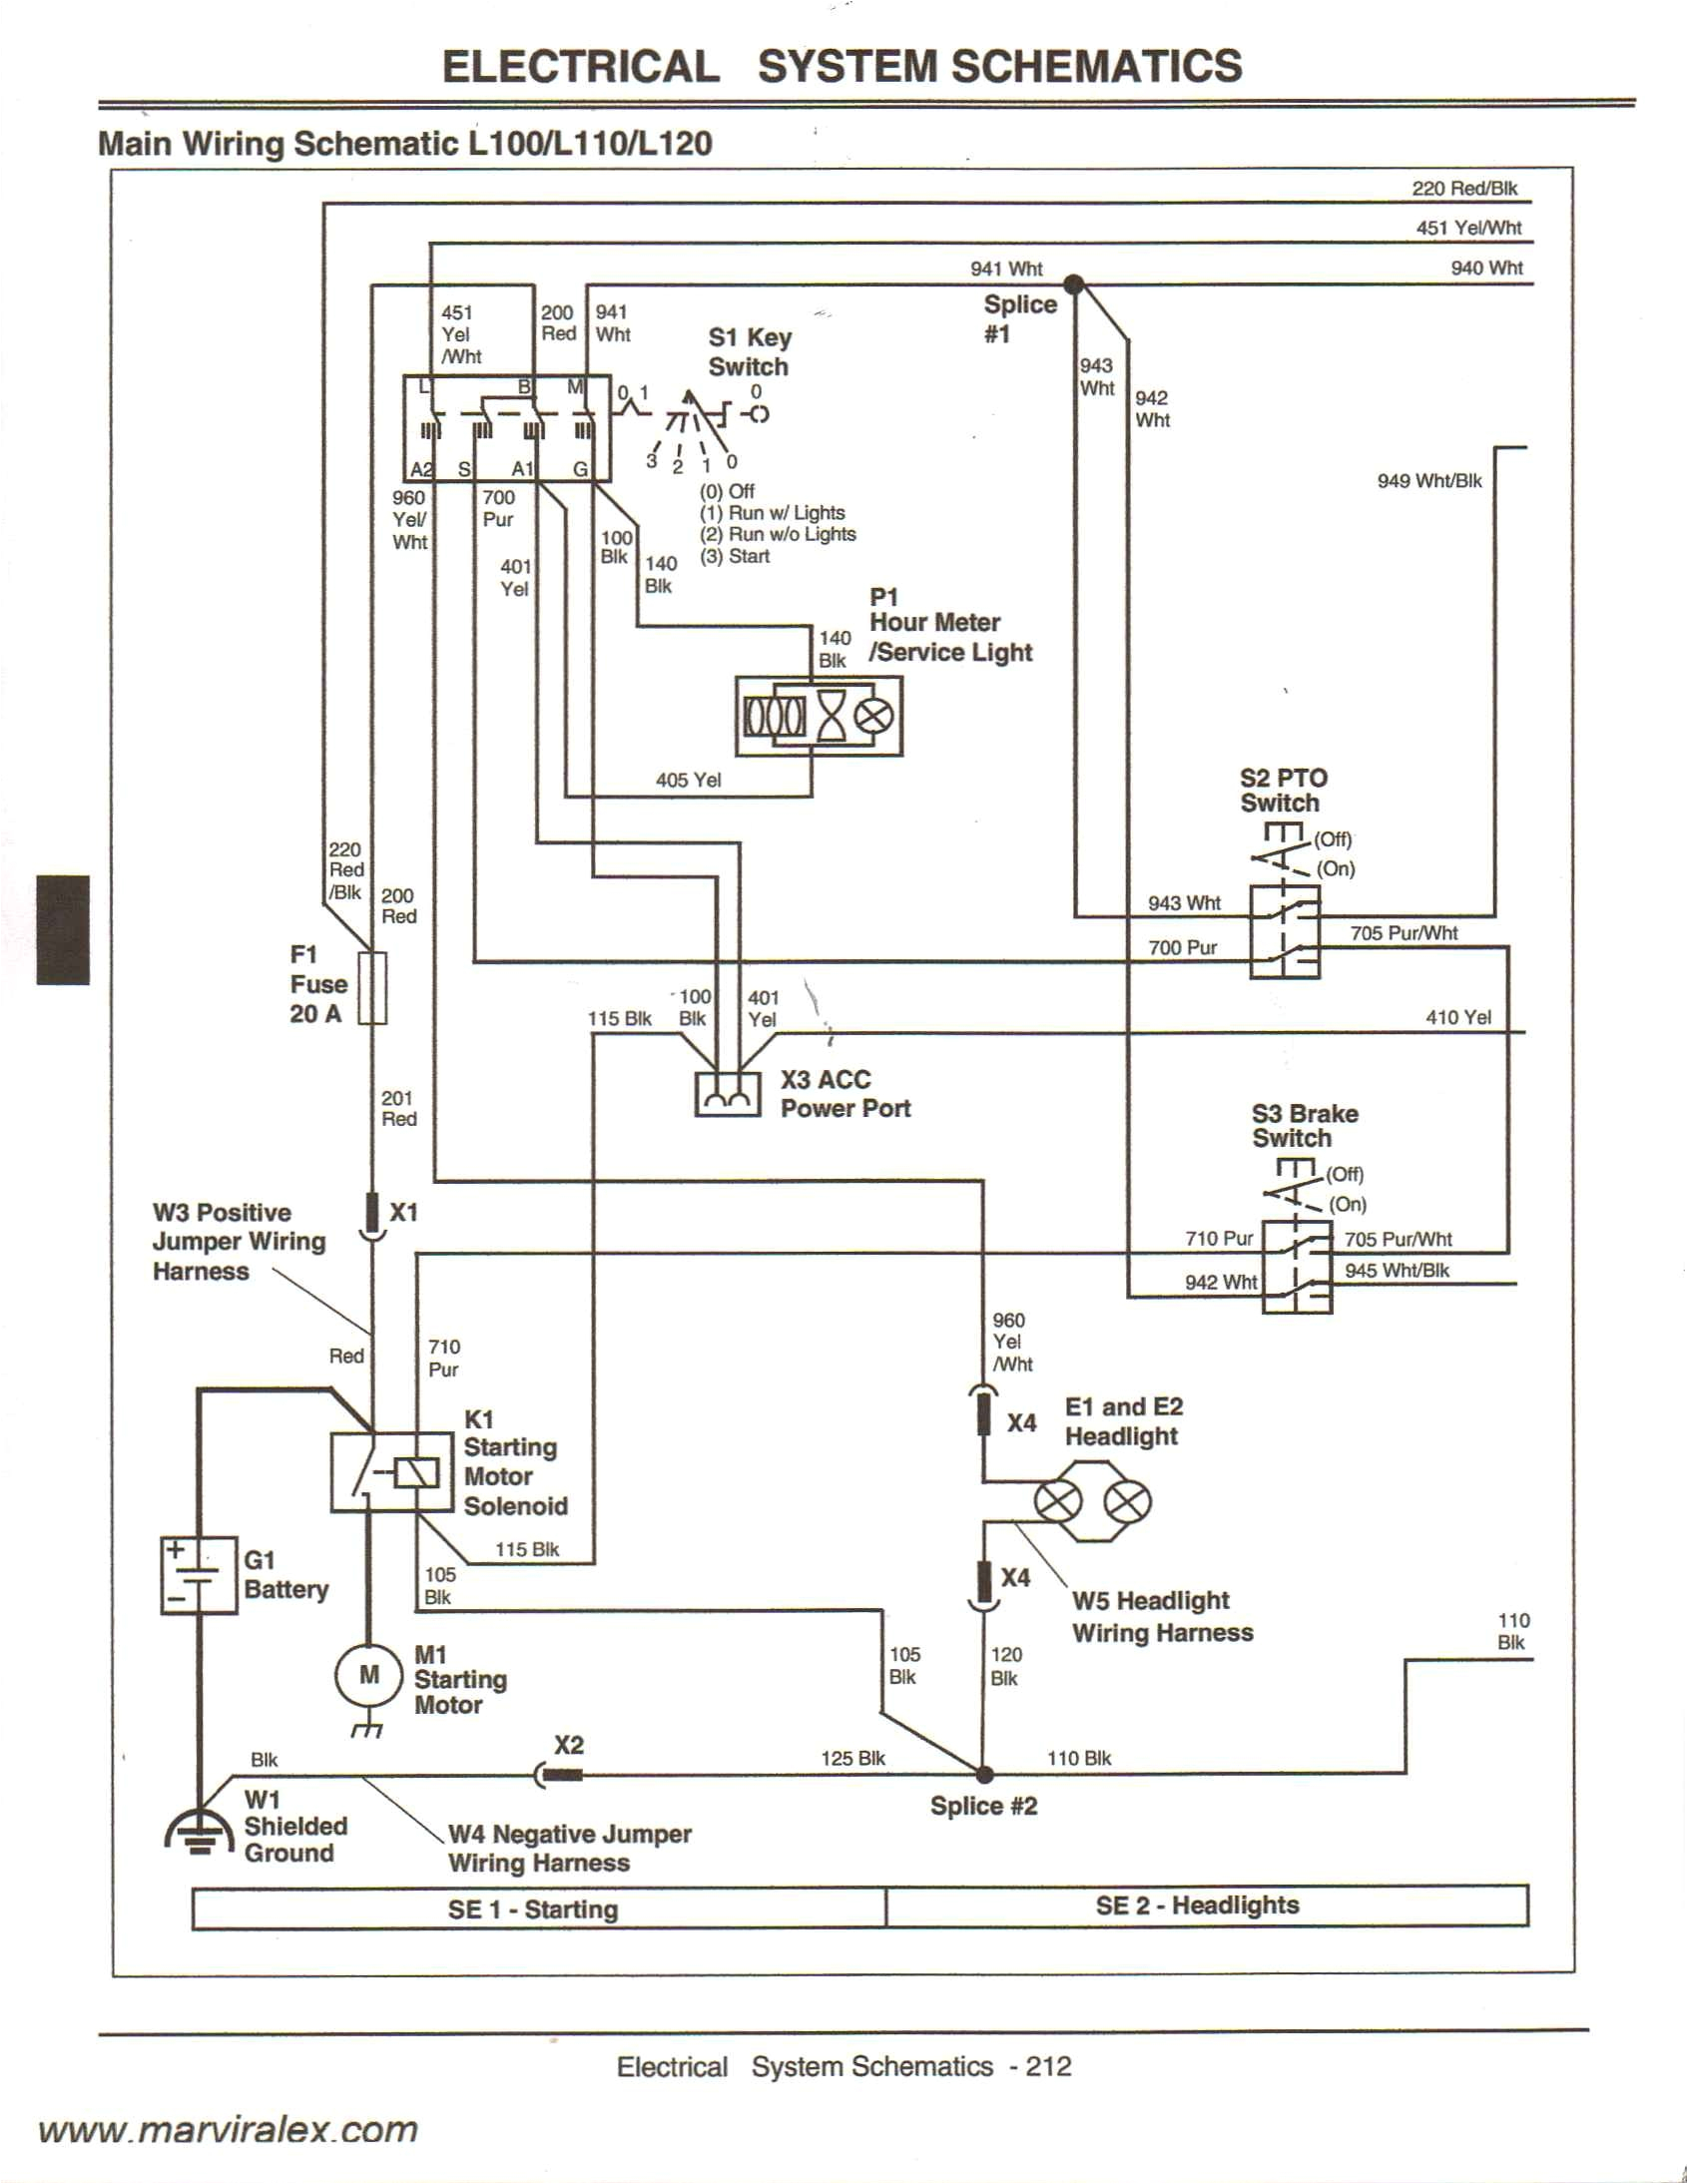 wiring diagram for john deere riding lawn mower john deere 318 ignition switch wiring diagram refrence john deere wiring diagrams wiring diagram collection 4b jpg